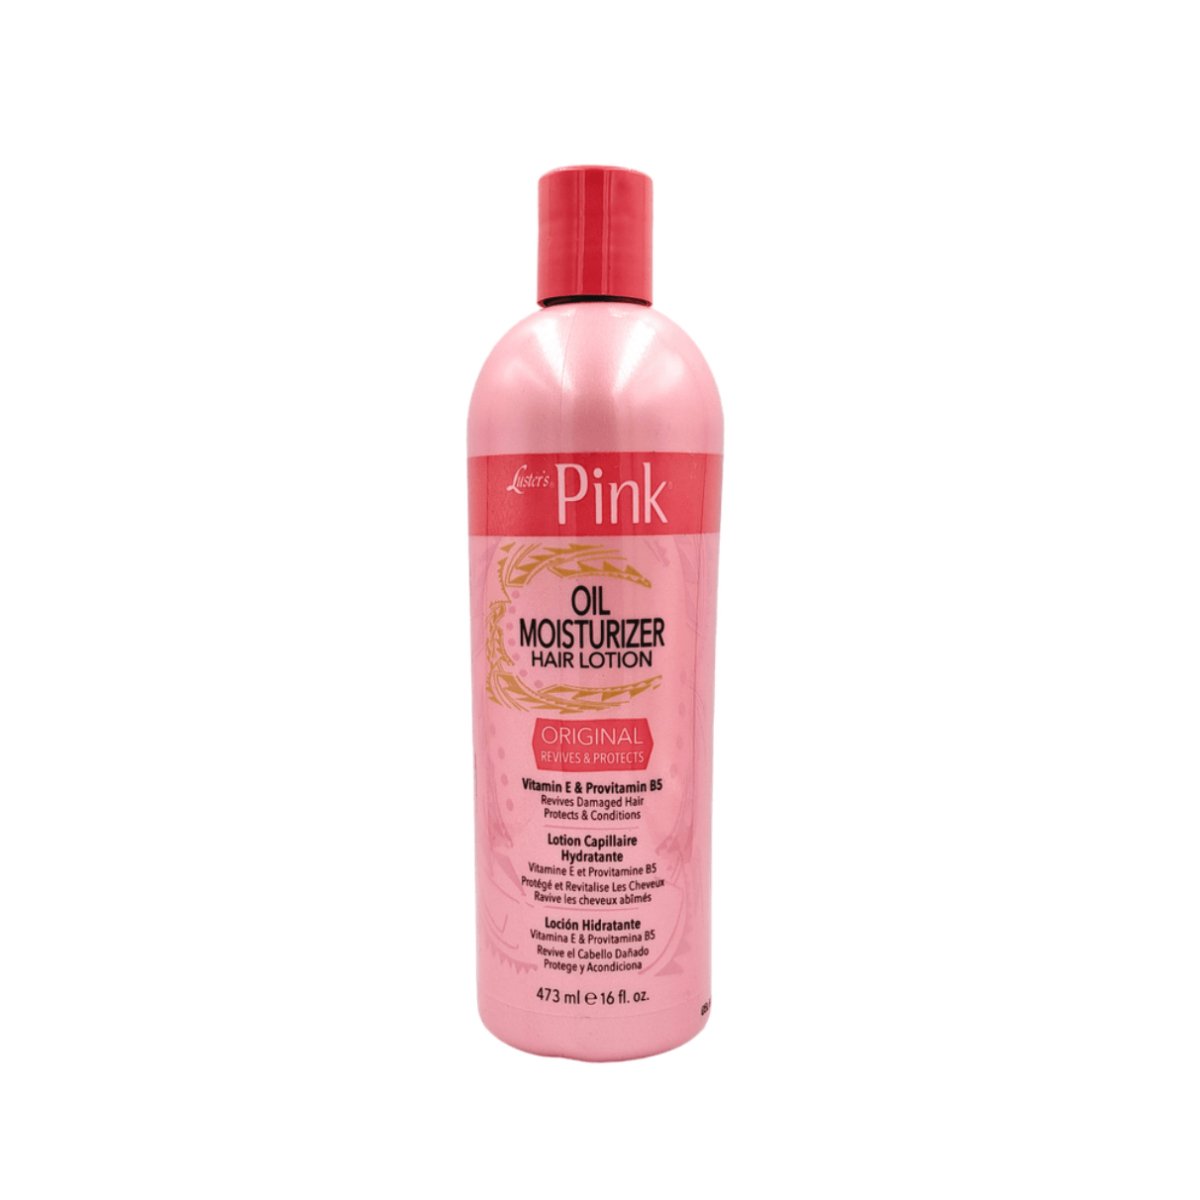 Luster's Pink Oil Moisturizer Hair Lotion 473ml - CosFair GmbH